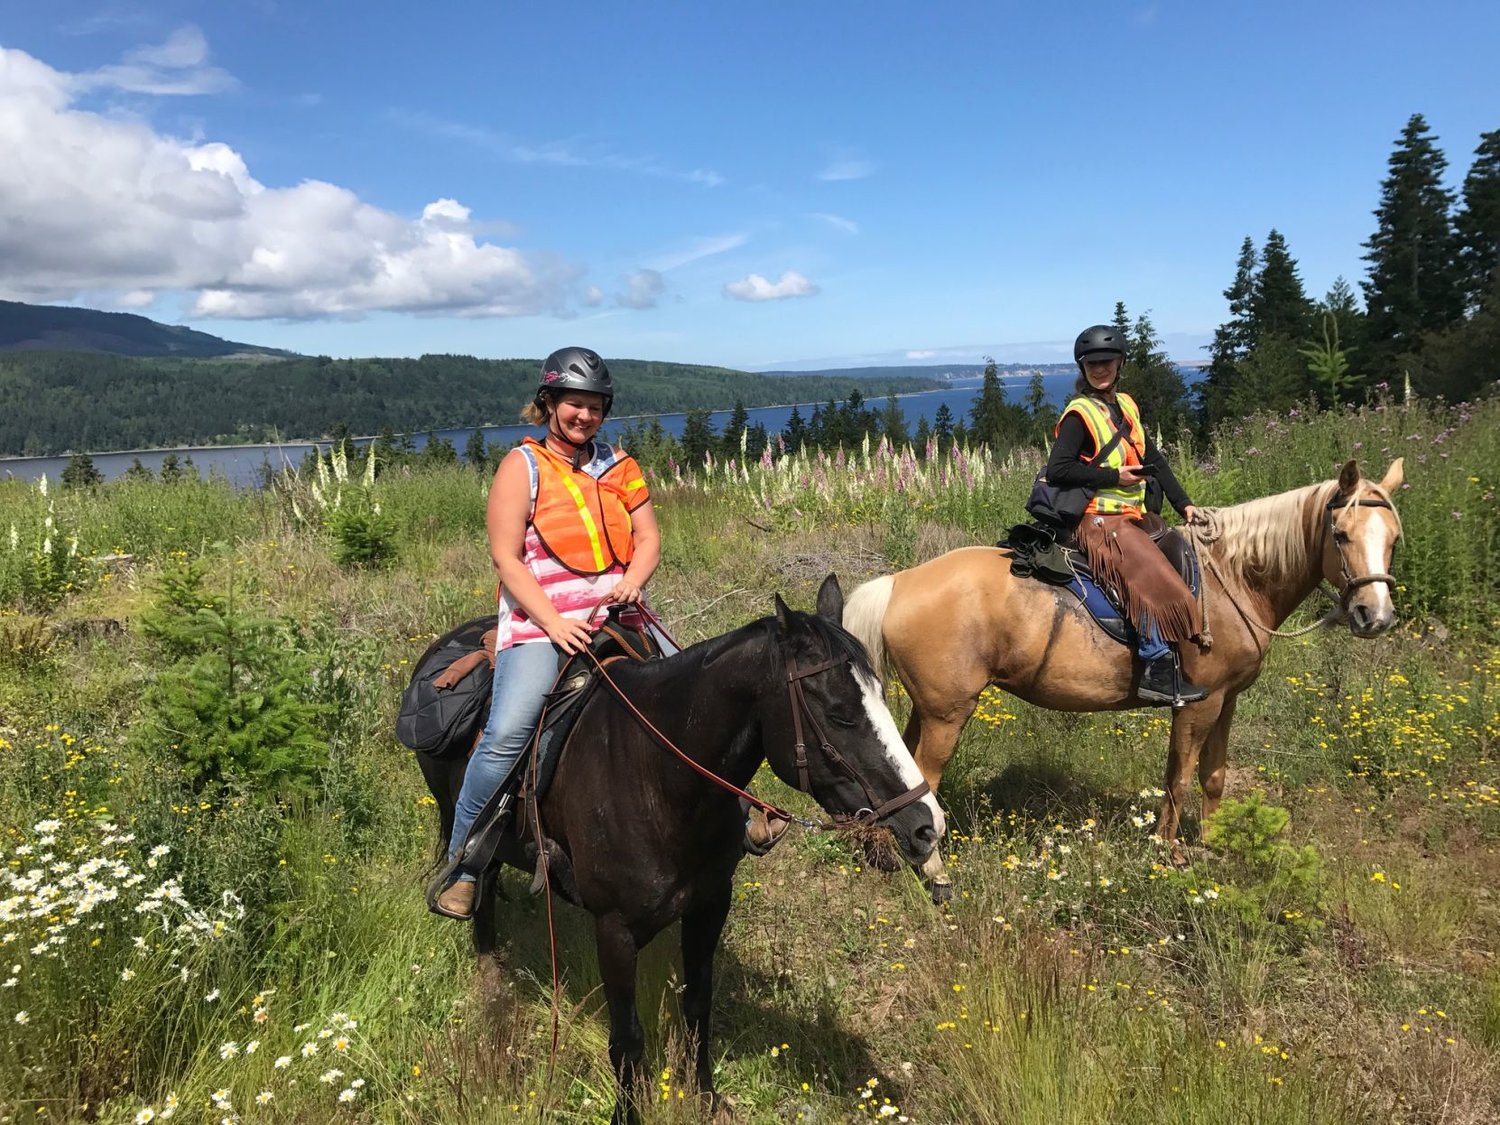 Horseback riding quartet blazes Olympic Discovery Trail